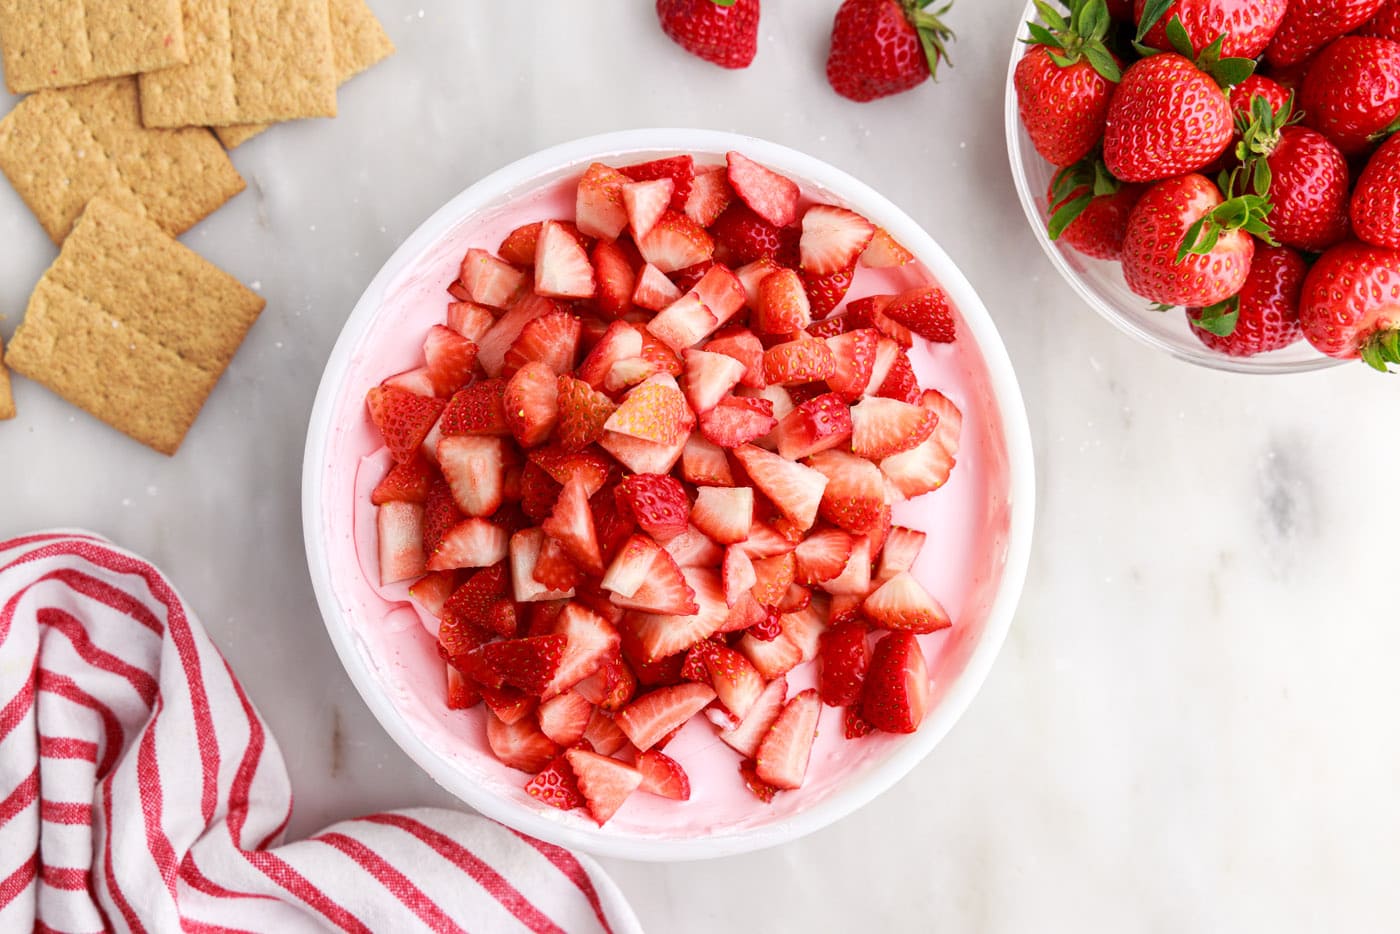 chopped strawberries over strawberry gelatin mixture